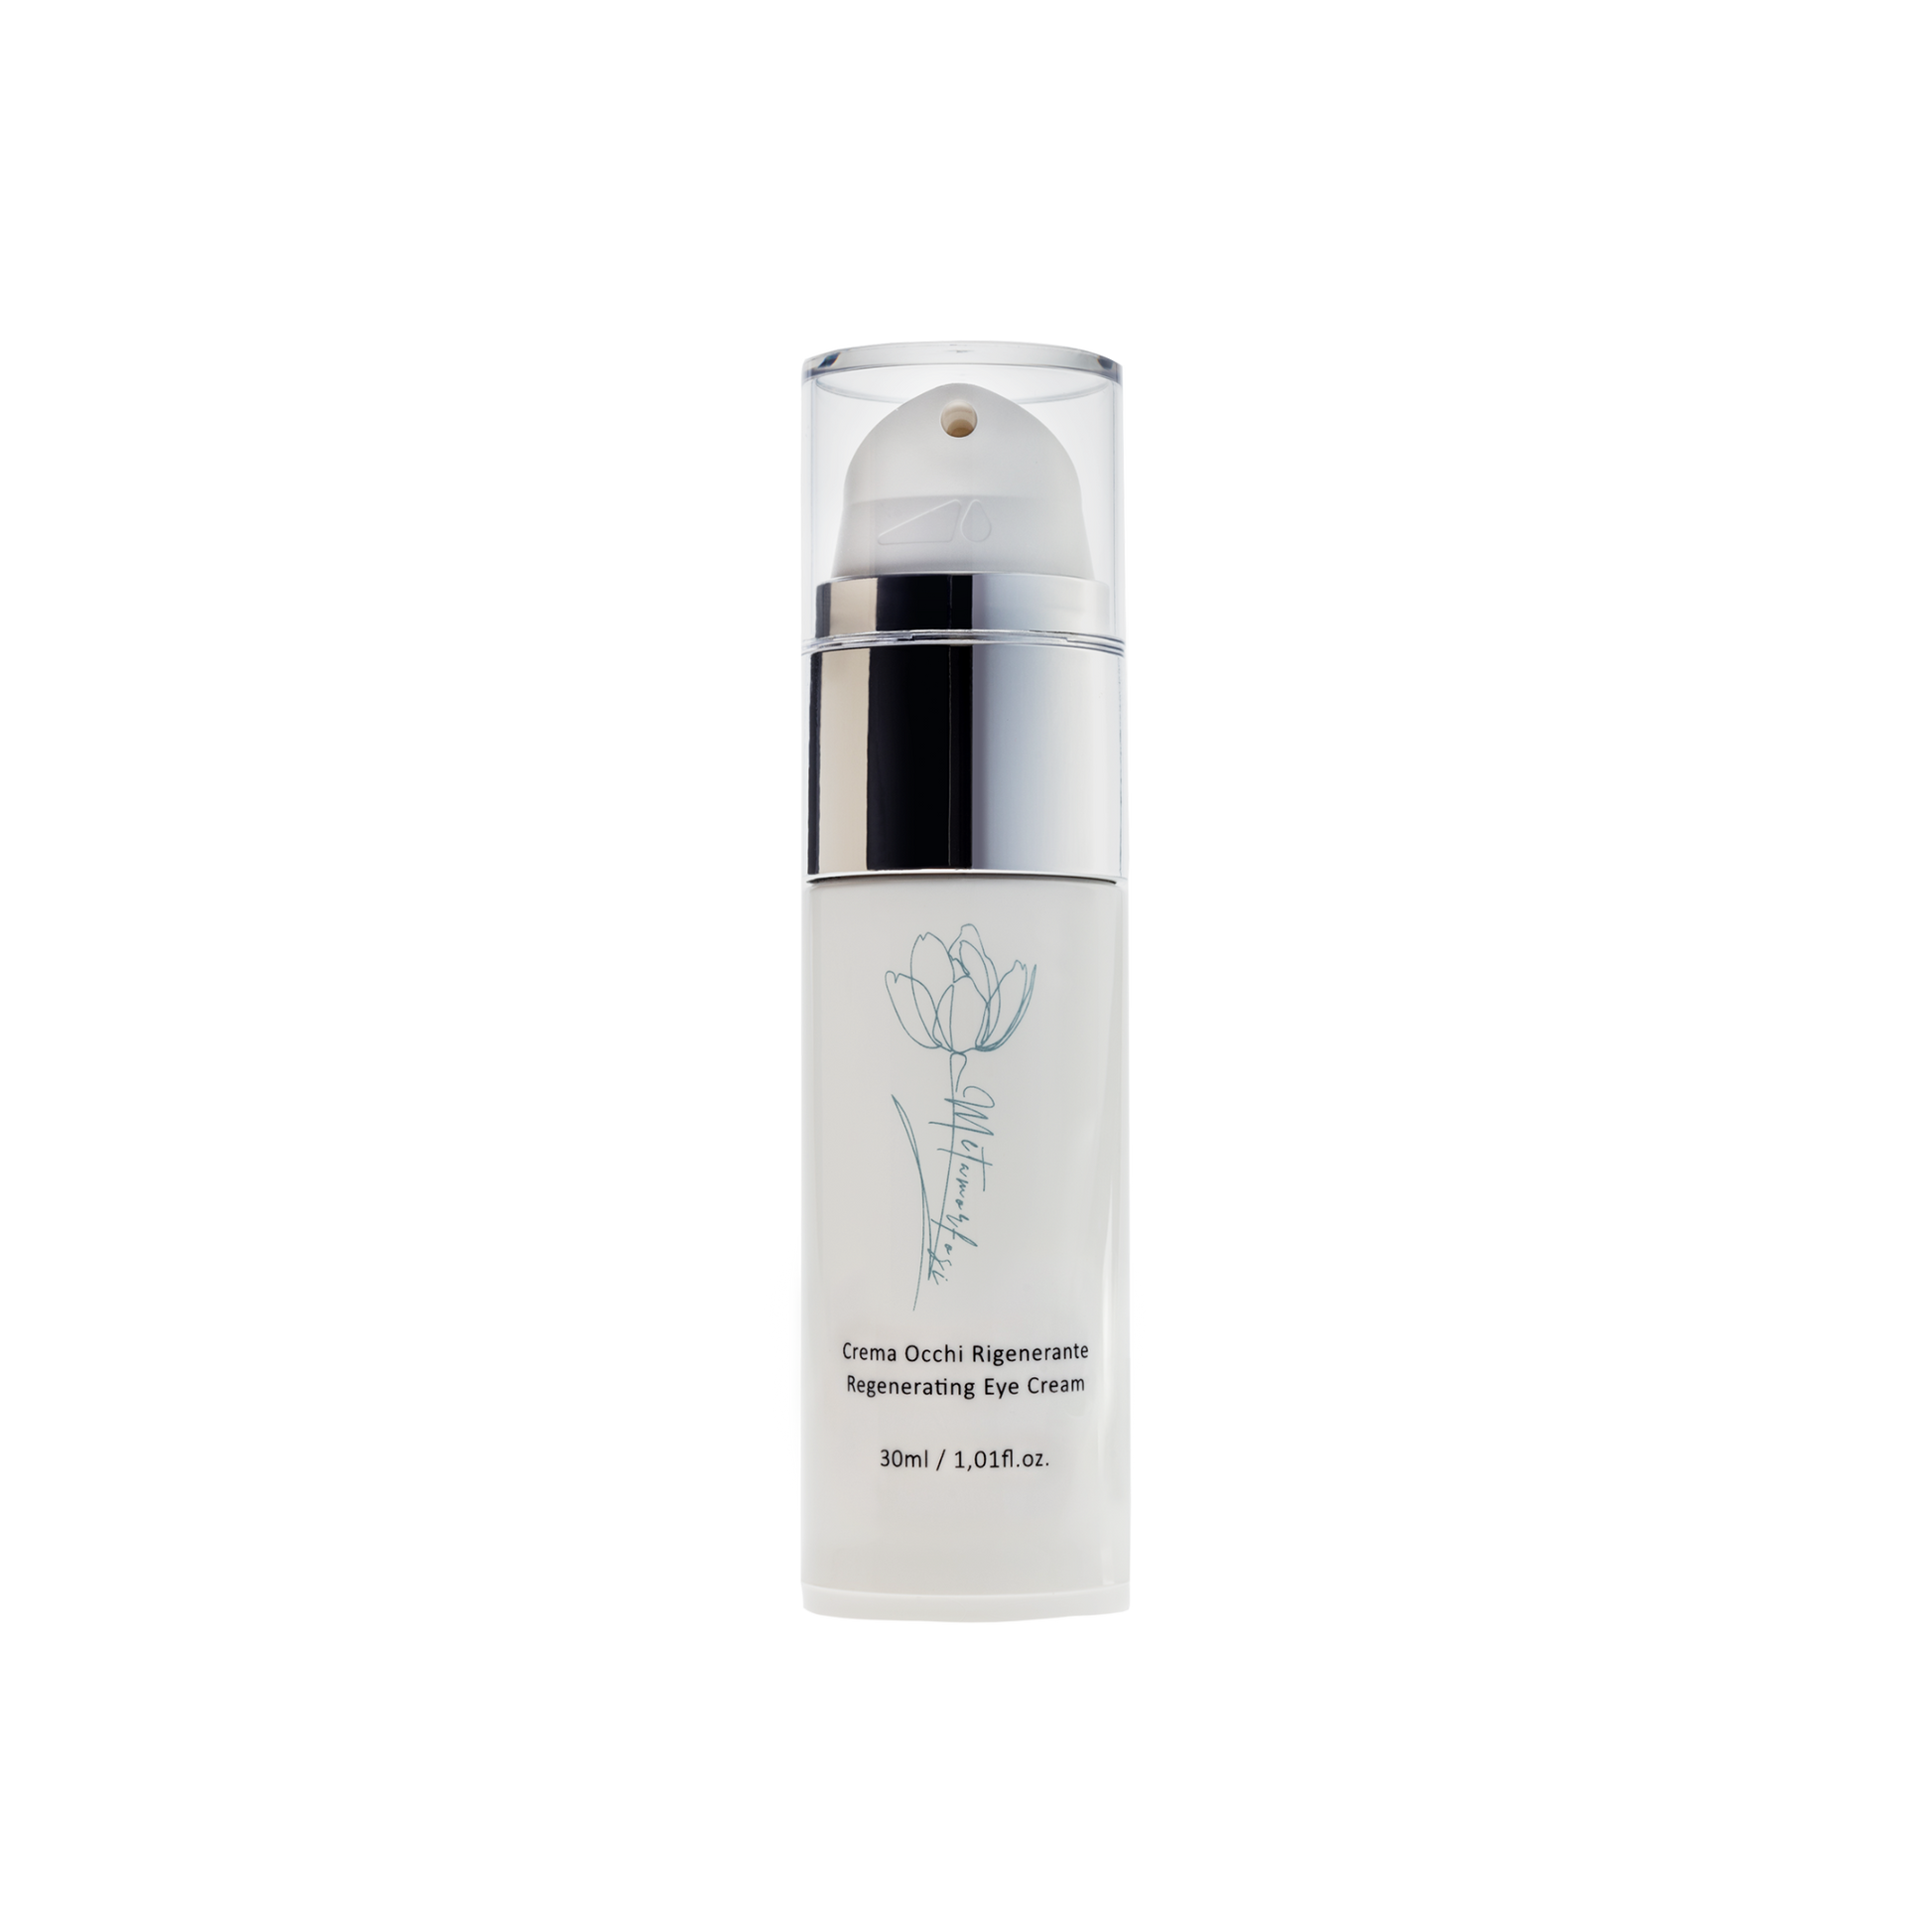 Regenerating Eye Cream: Anti-Wrinkle Eye Cream Airless 30ml Bottle by Metamorfosi Skincare, Made In Italy